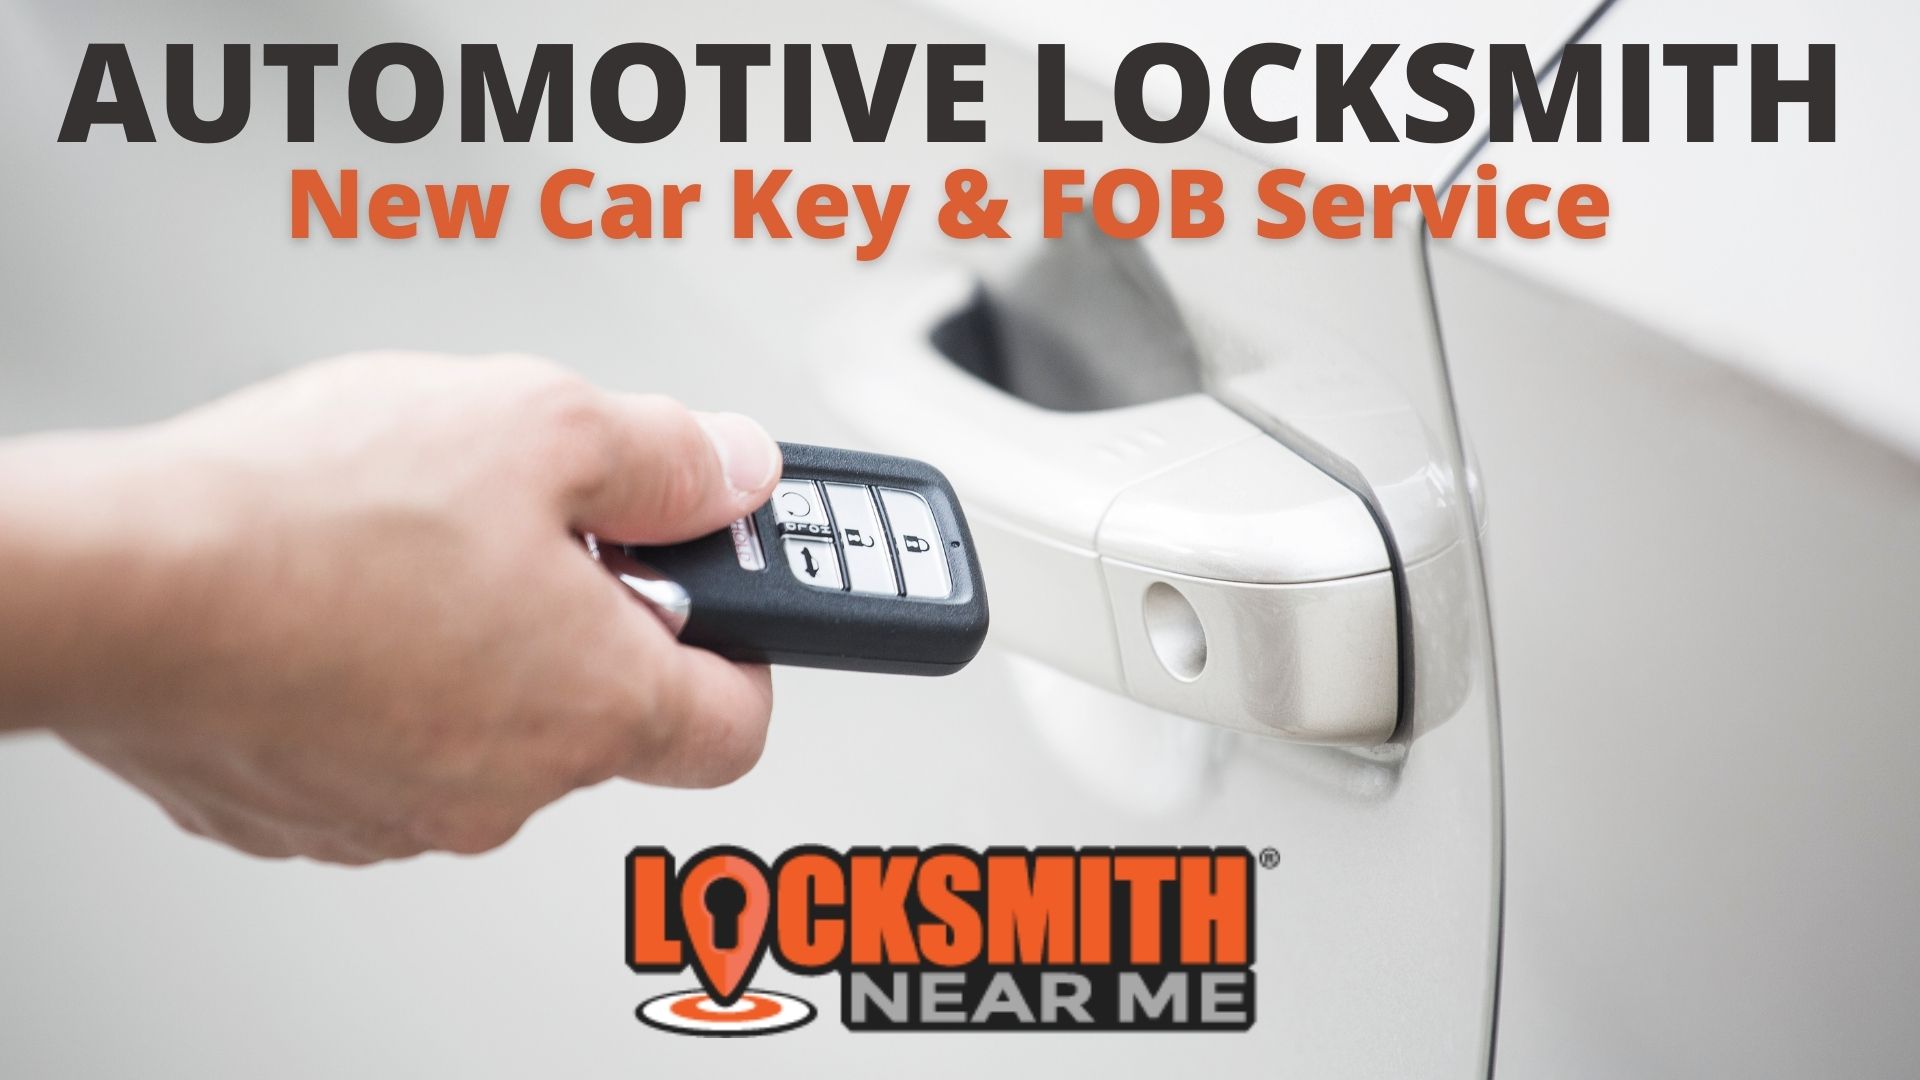 Automotive Locksmith Service to Make New Car Key